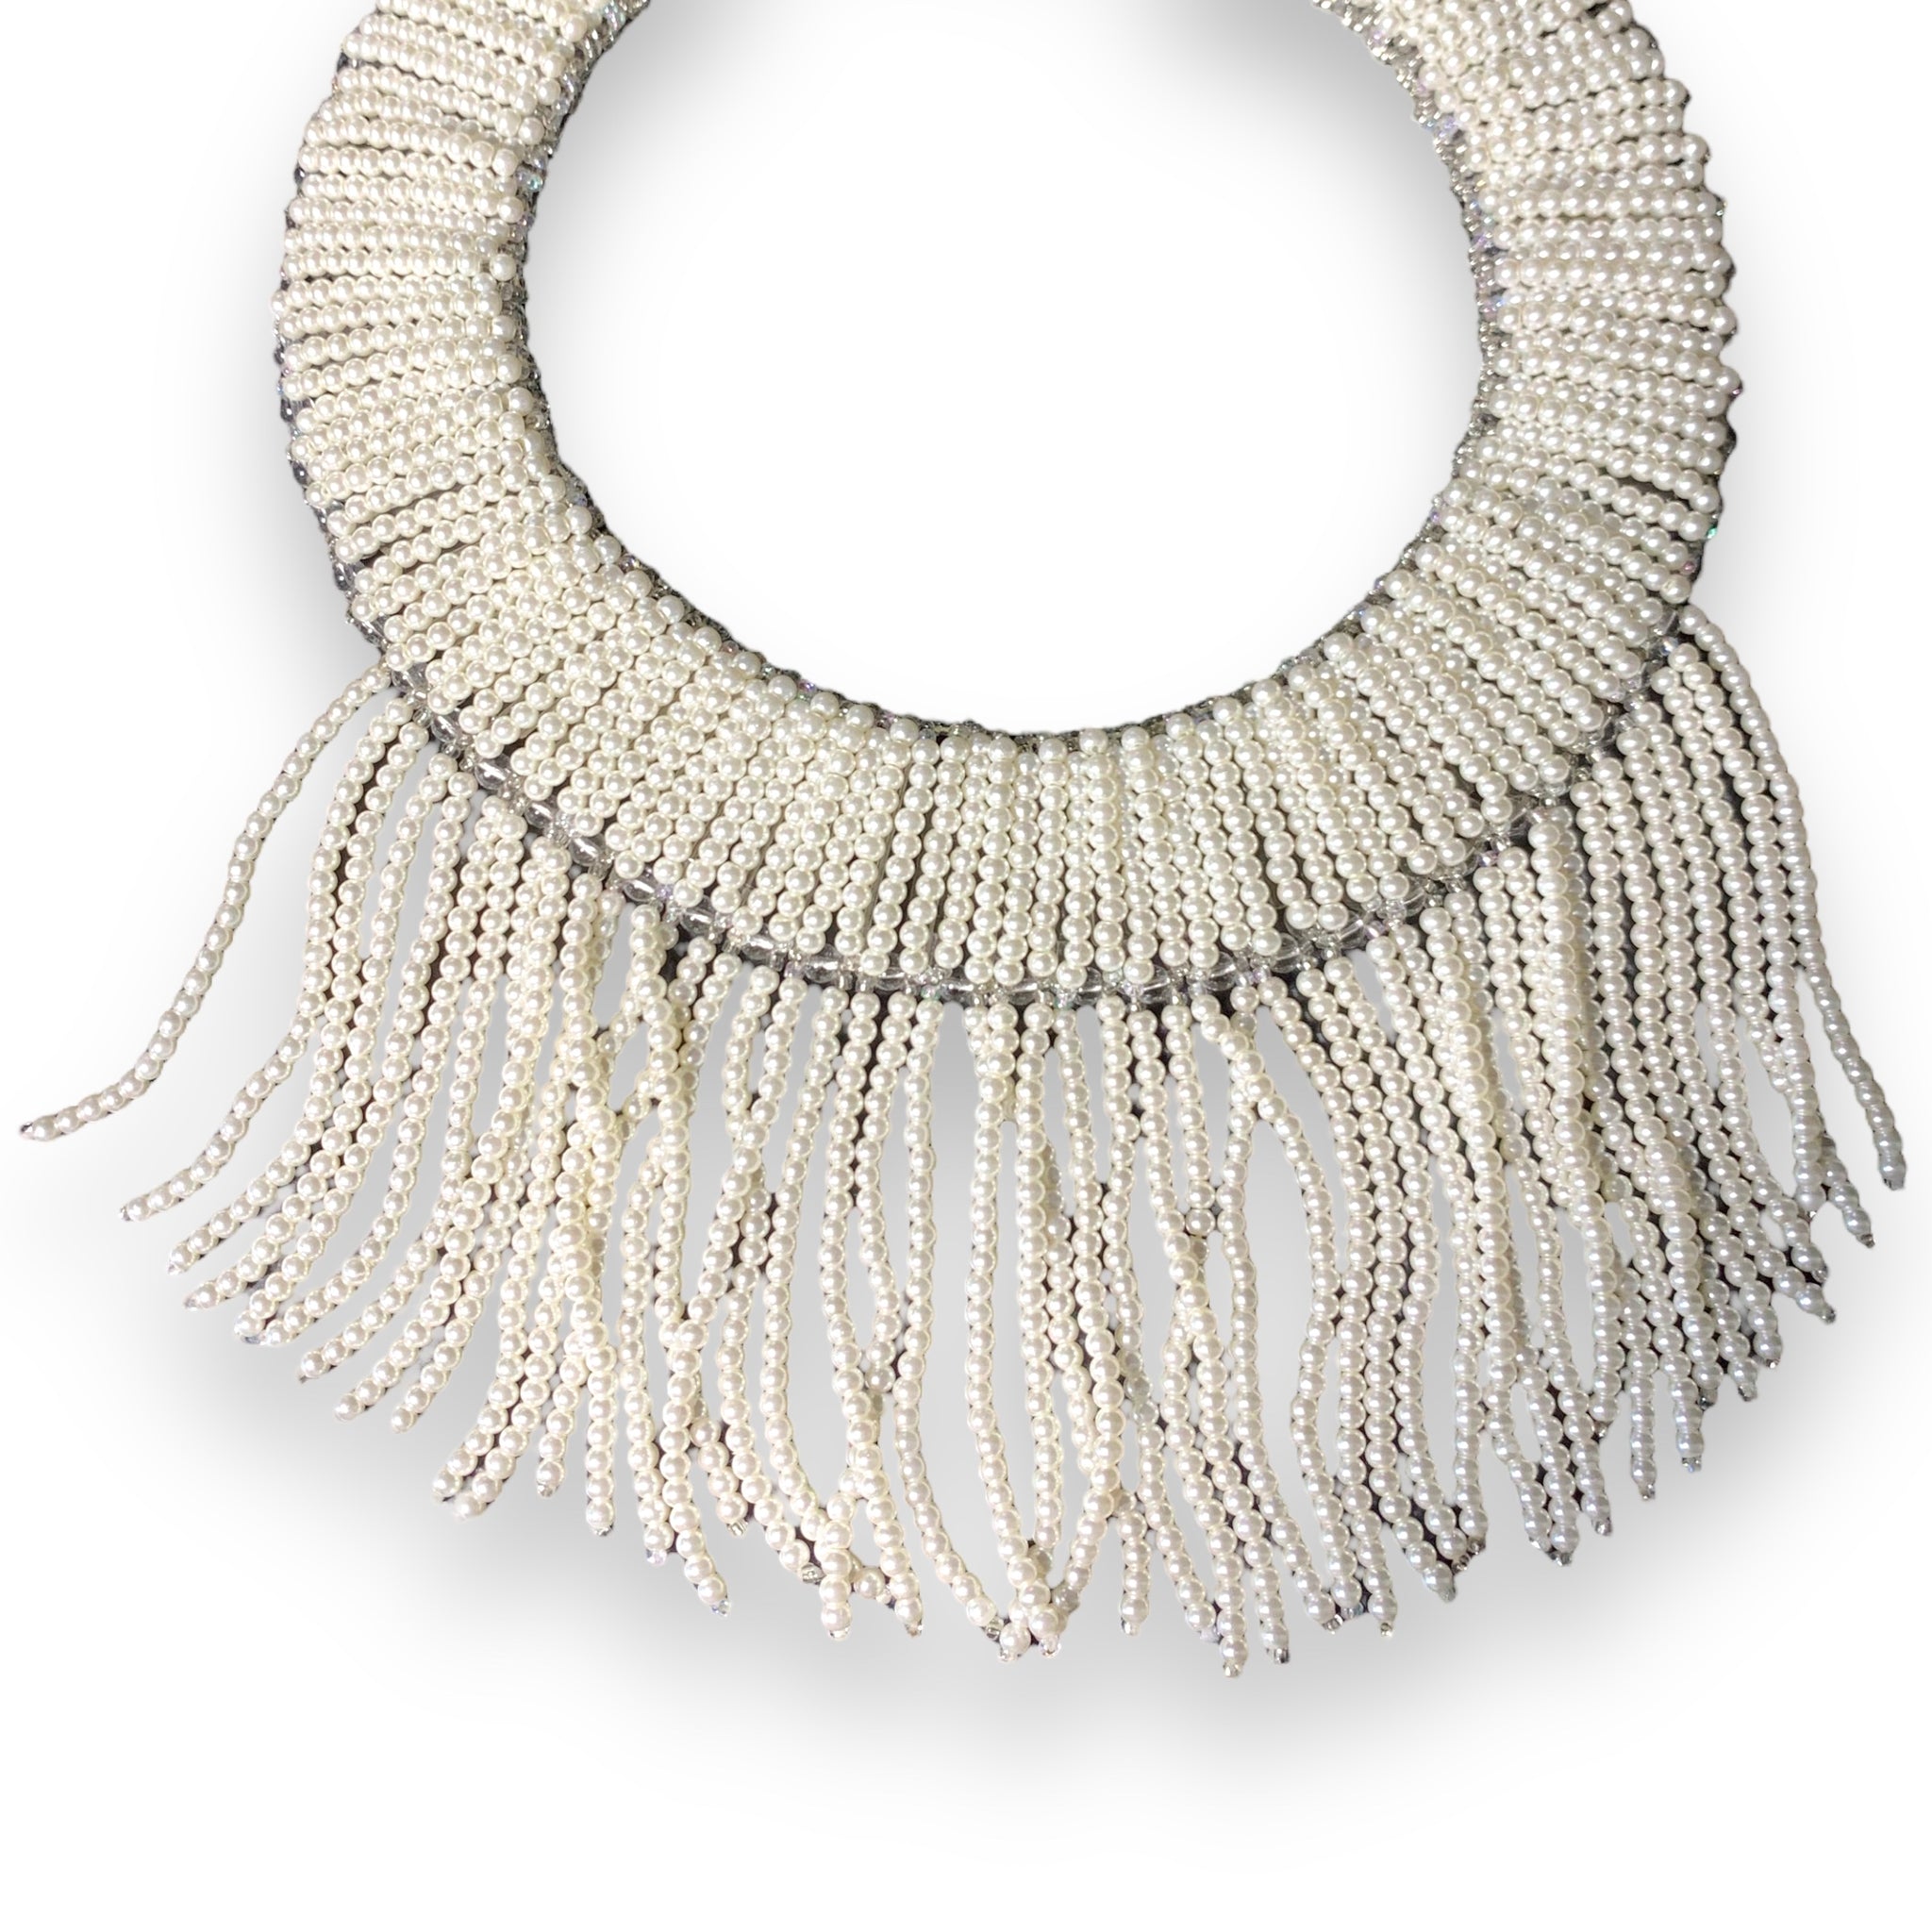 Handmade Choker Fringed Tassels White Pearl 19" Chic Bib Necklace